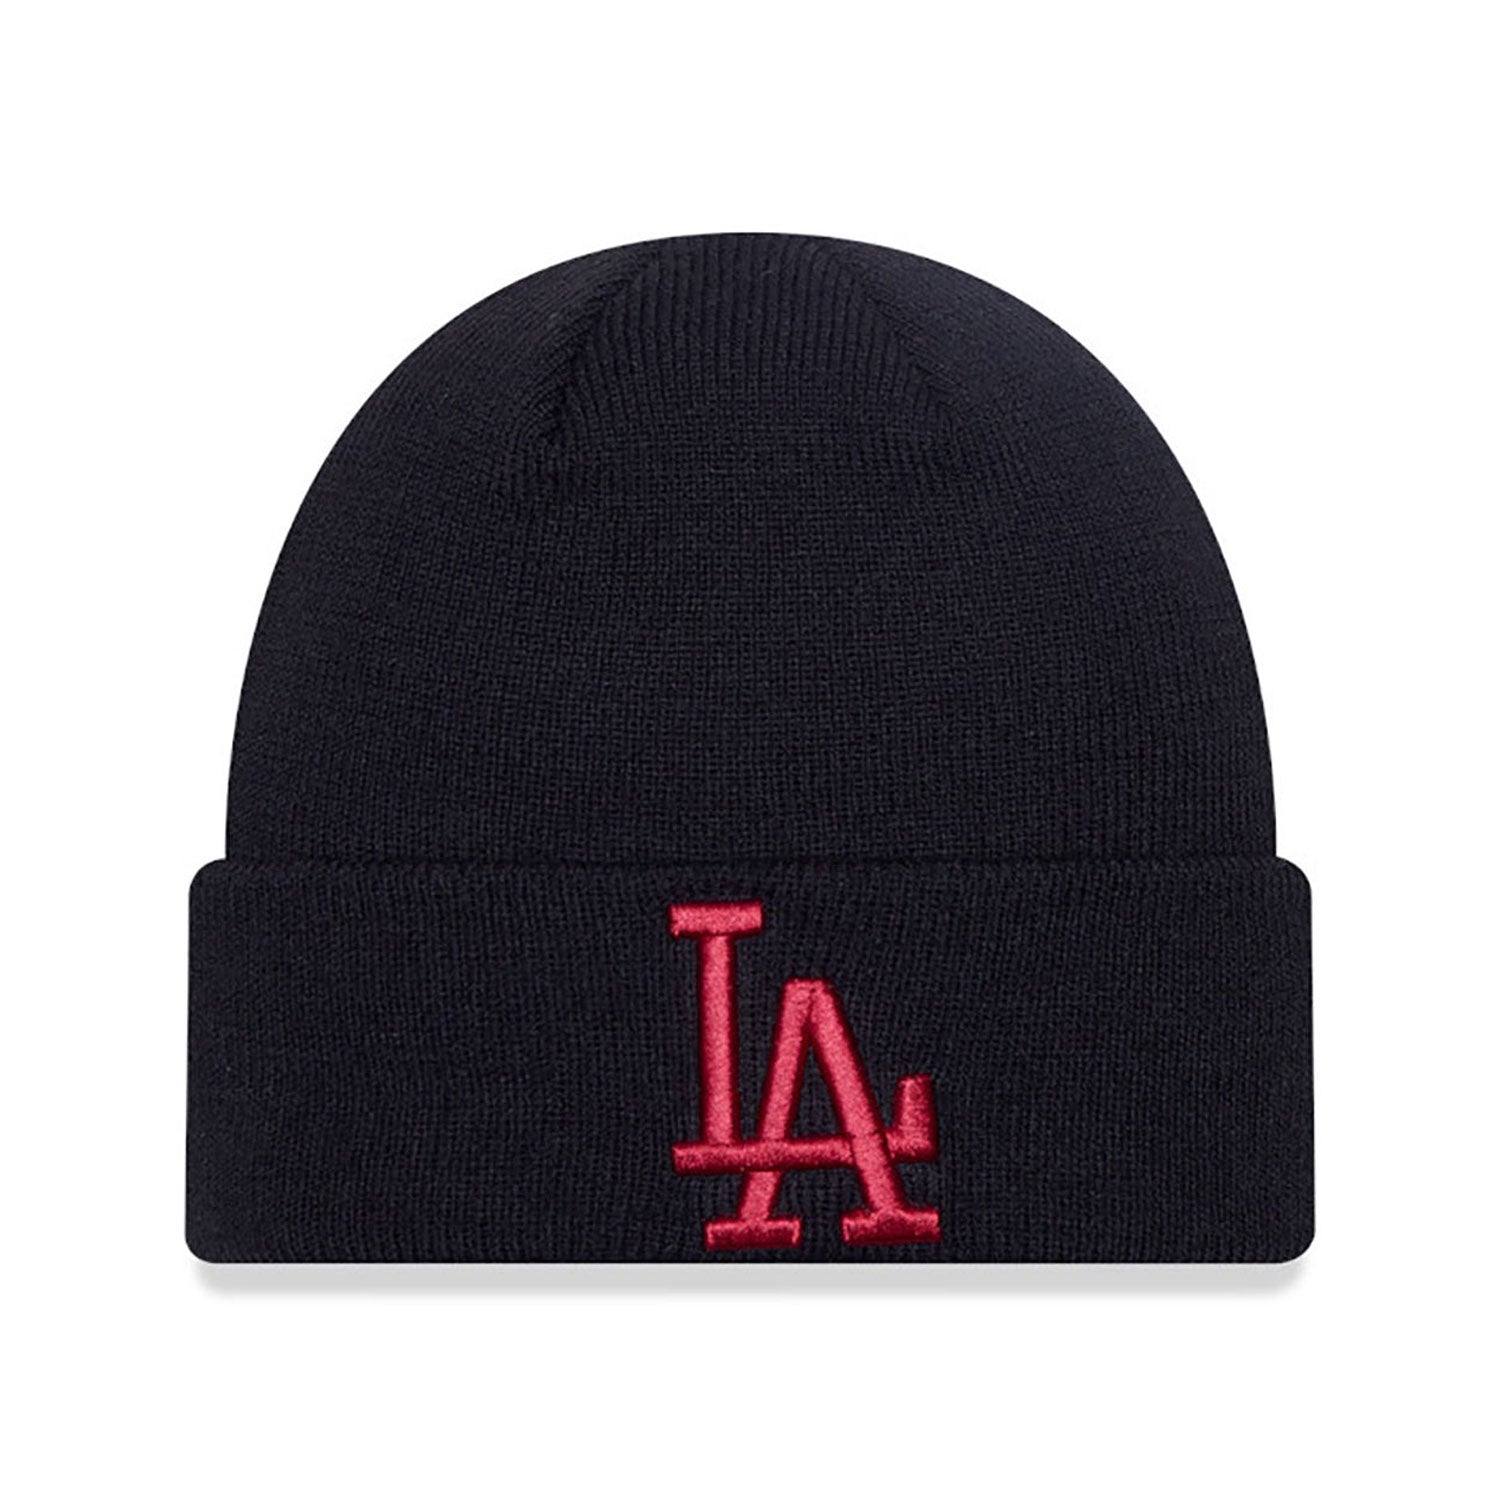 New Era bonnet kids LA Dodgers "Black/Red"